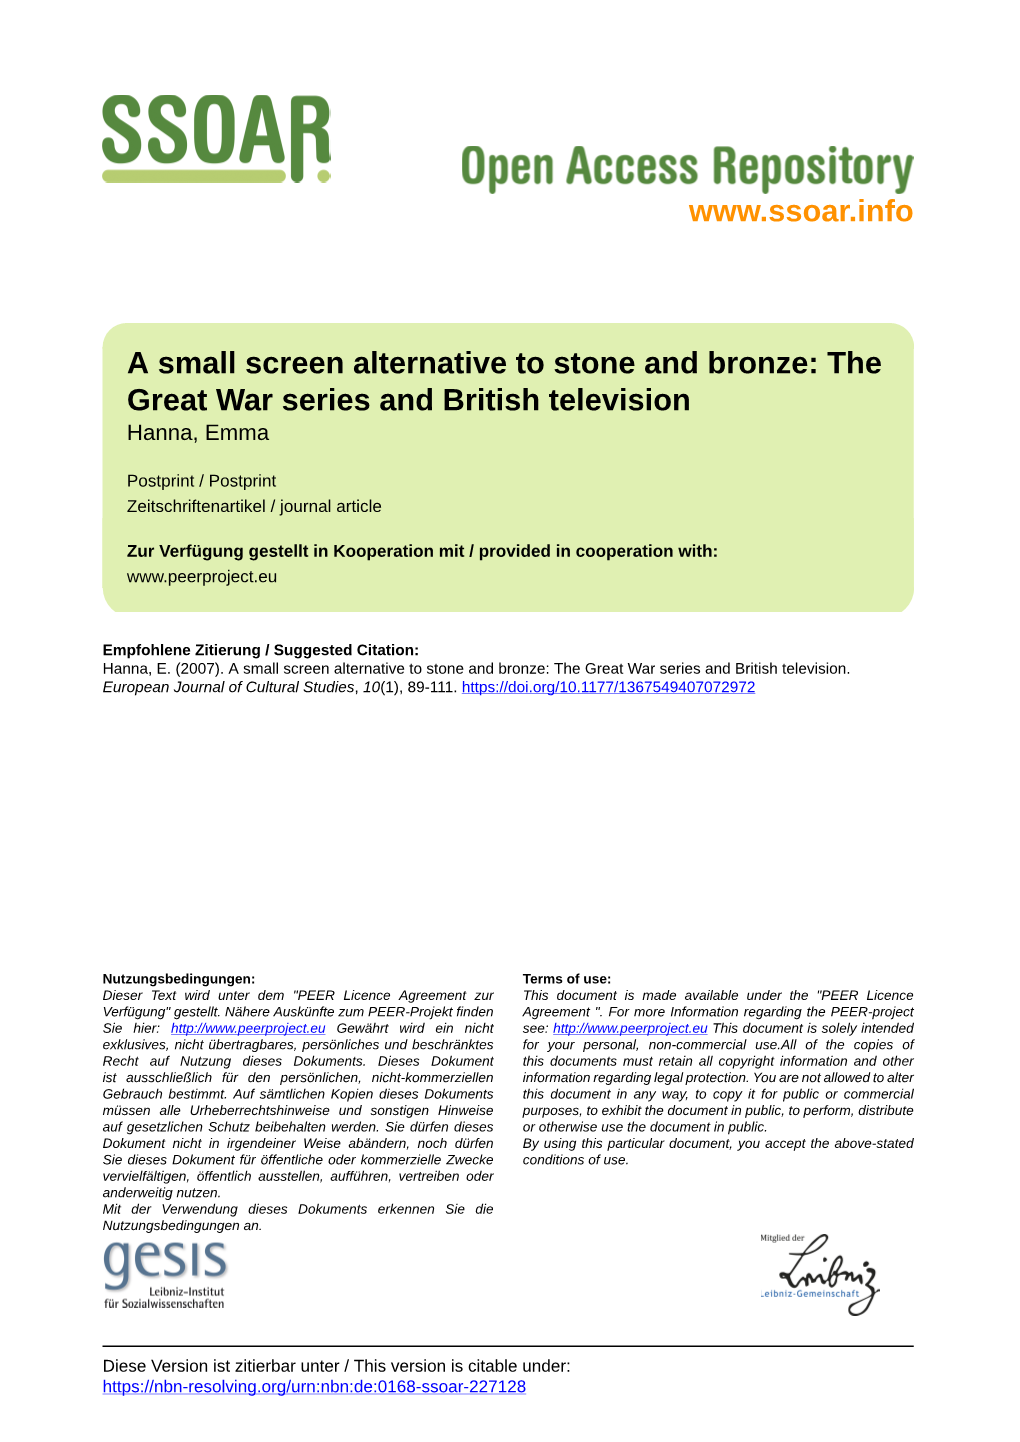 The Great War Series and British Television Hanna, Emma